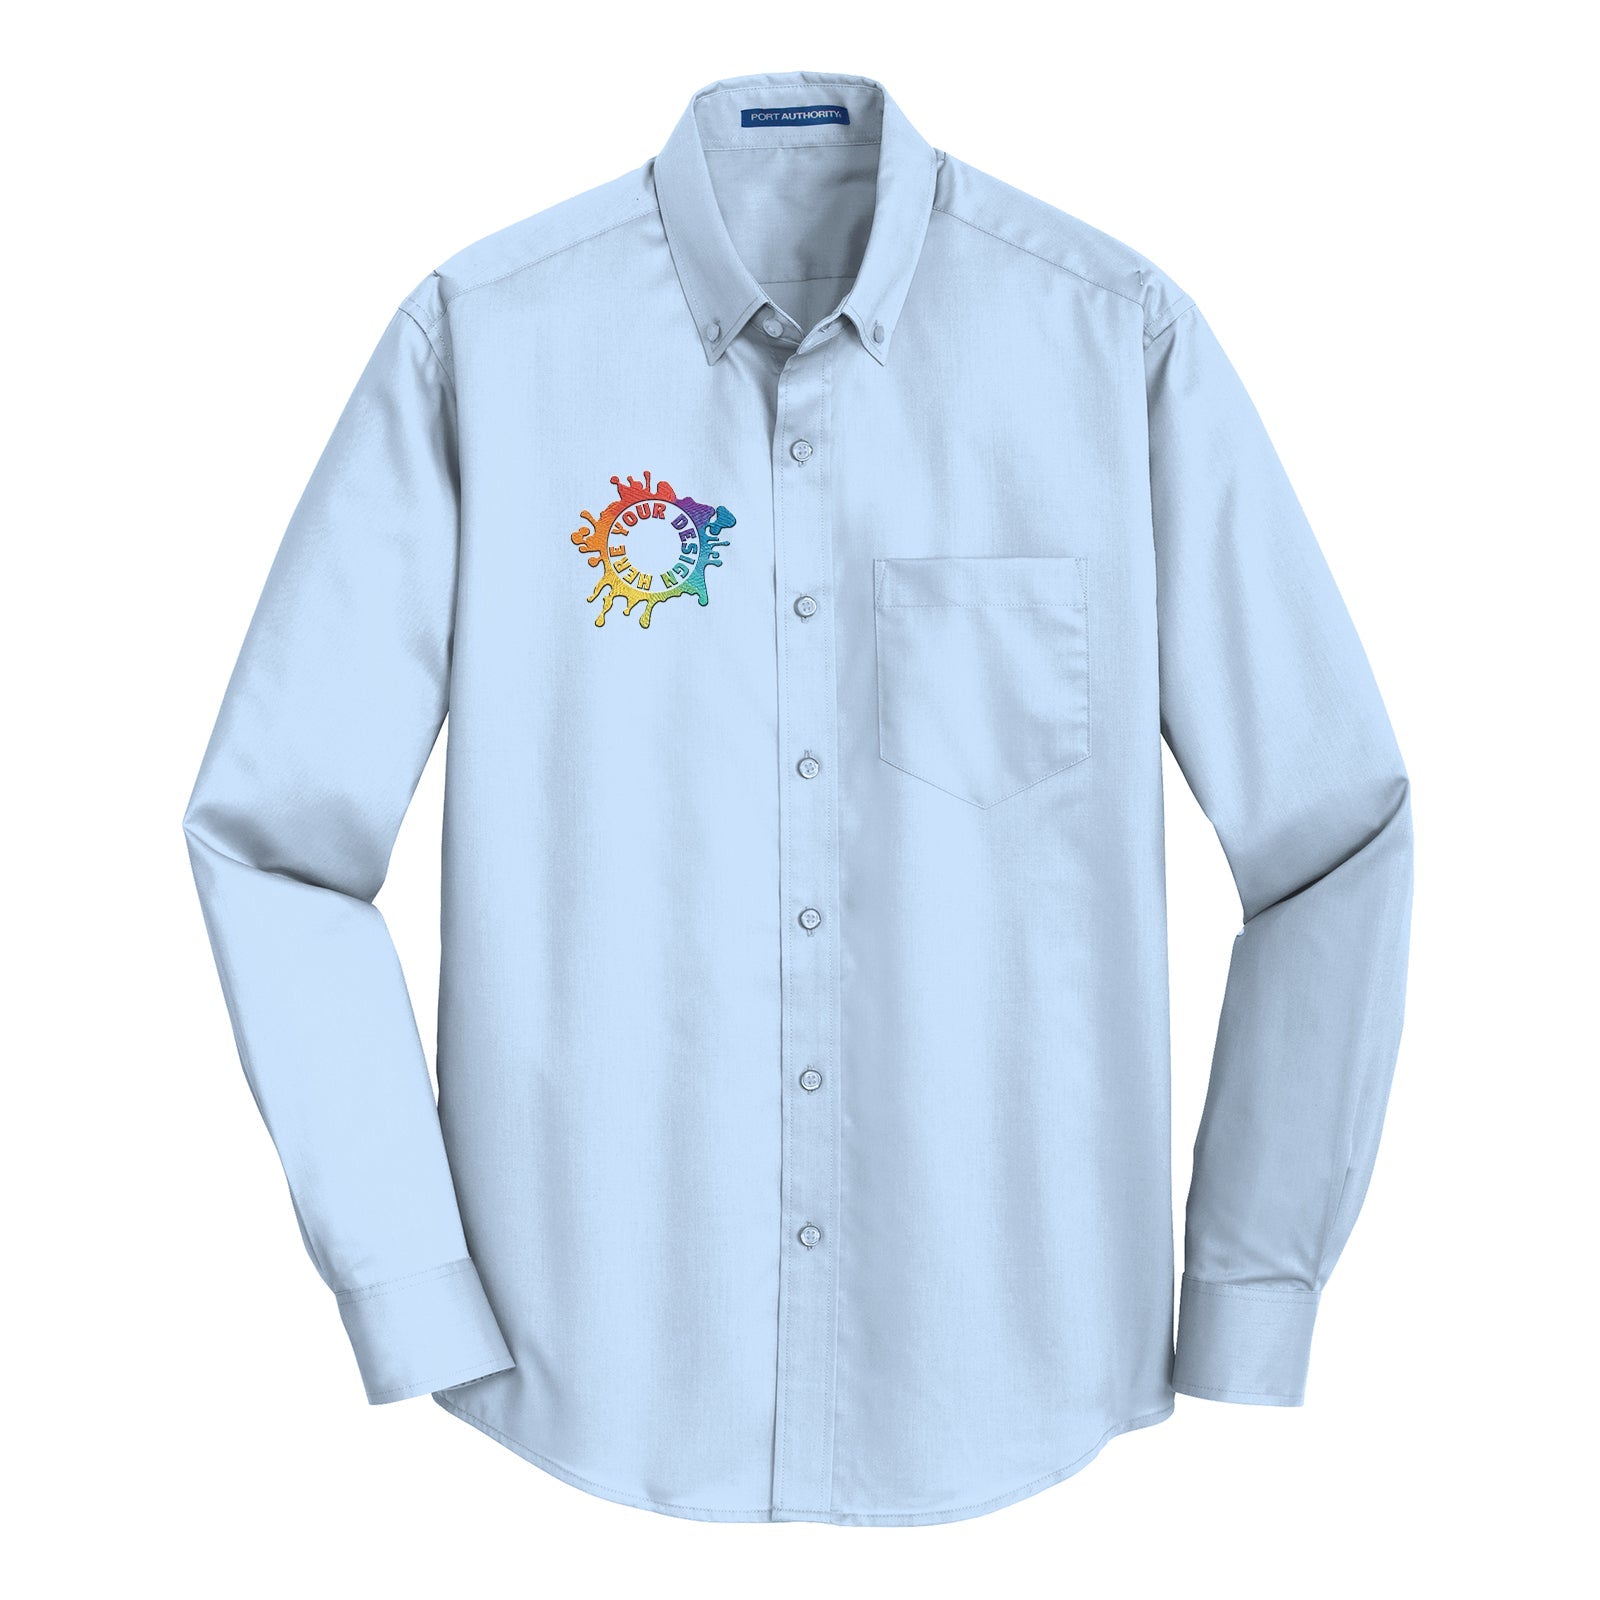 Port Authority SuperPro Twill Shirt Embroidery - Mato & Hash